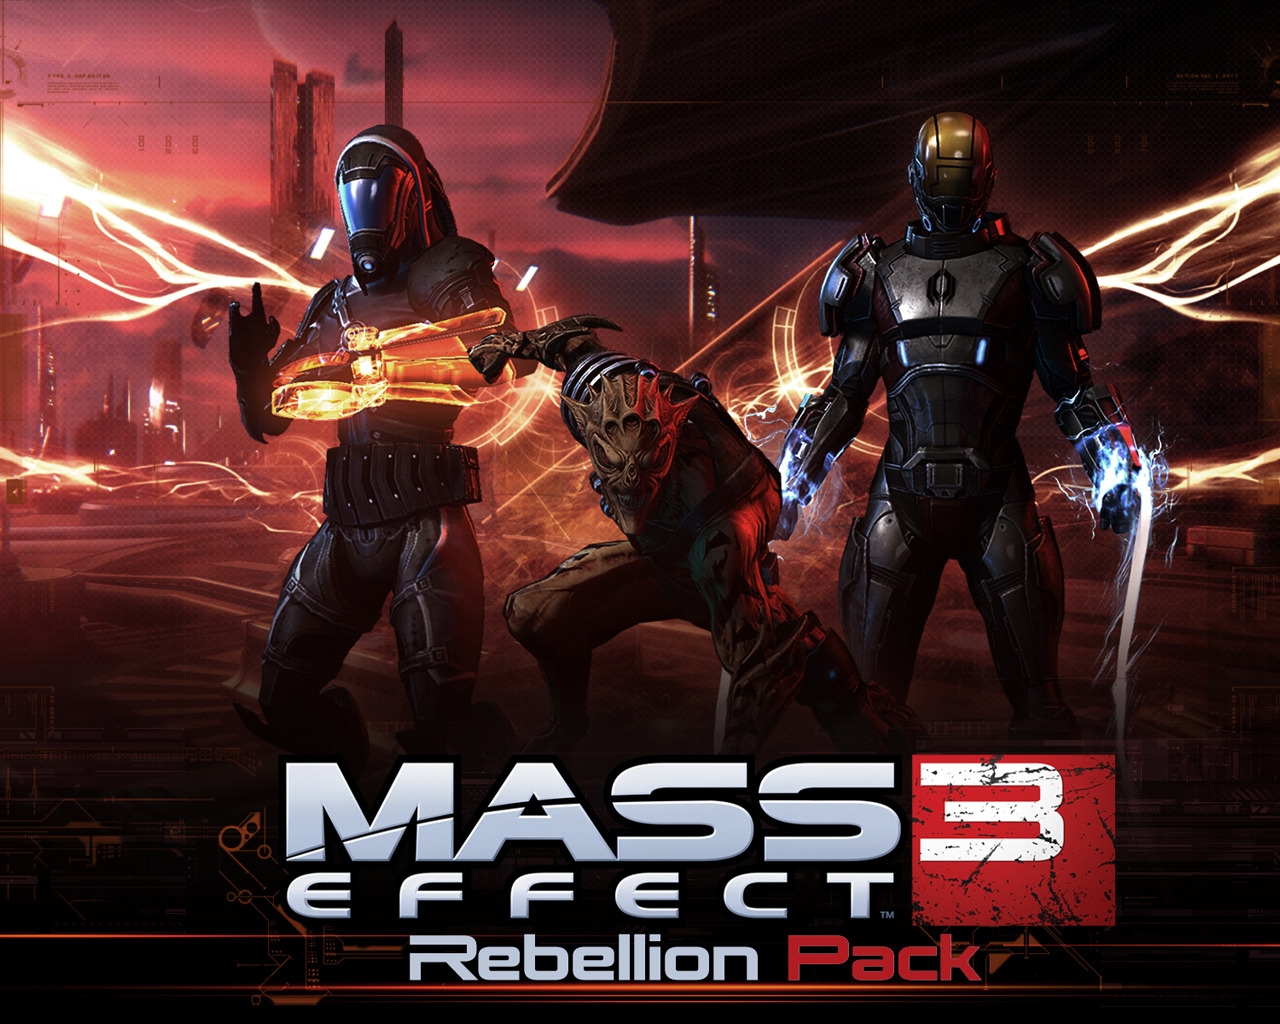 Mass Effect 3 Rebellion Pack for 1280 x 1024 resolution